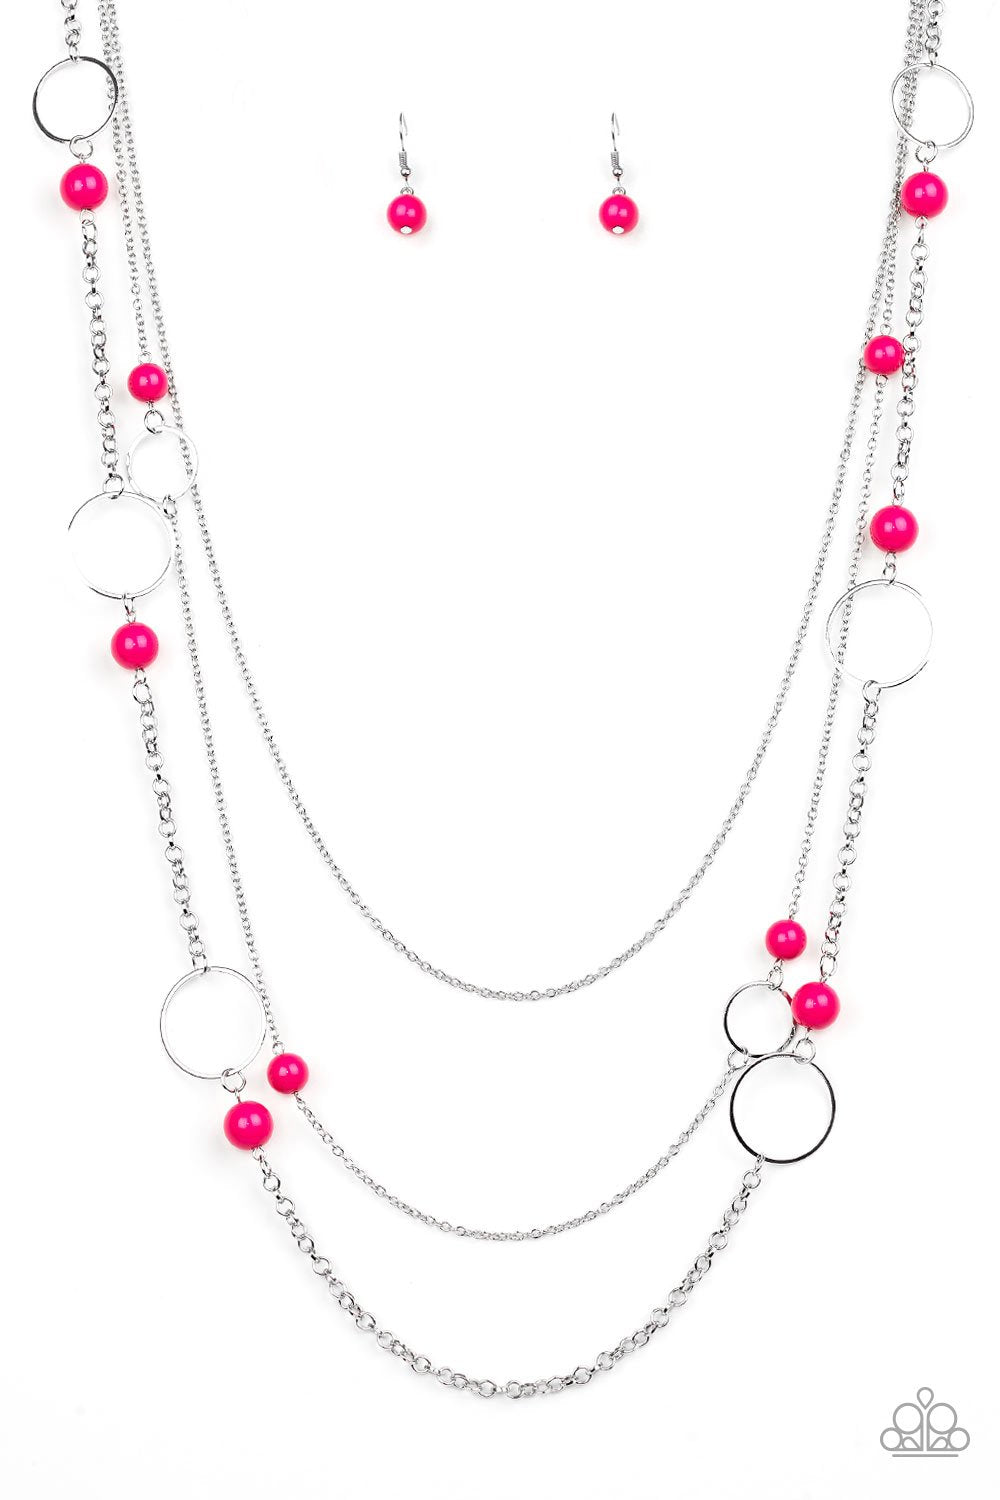 Beachside Babe - Pink Necklace freeshipping - JewLz4u Gemstone Gallery